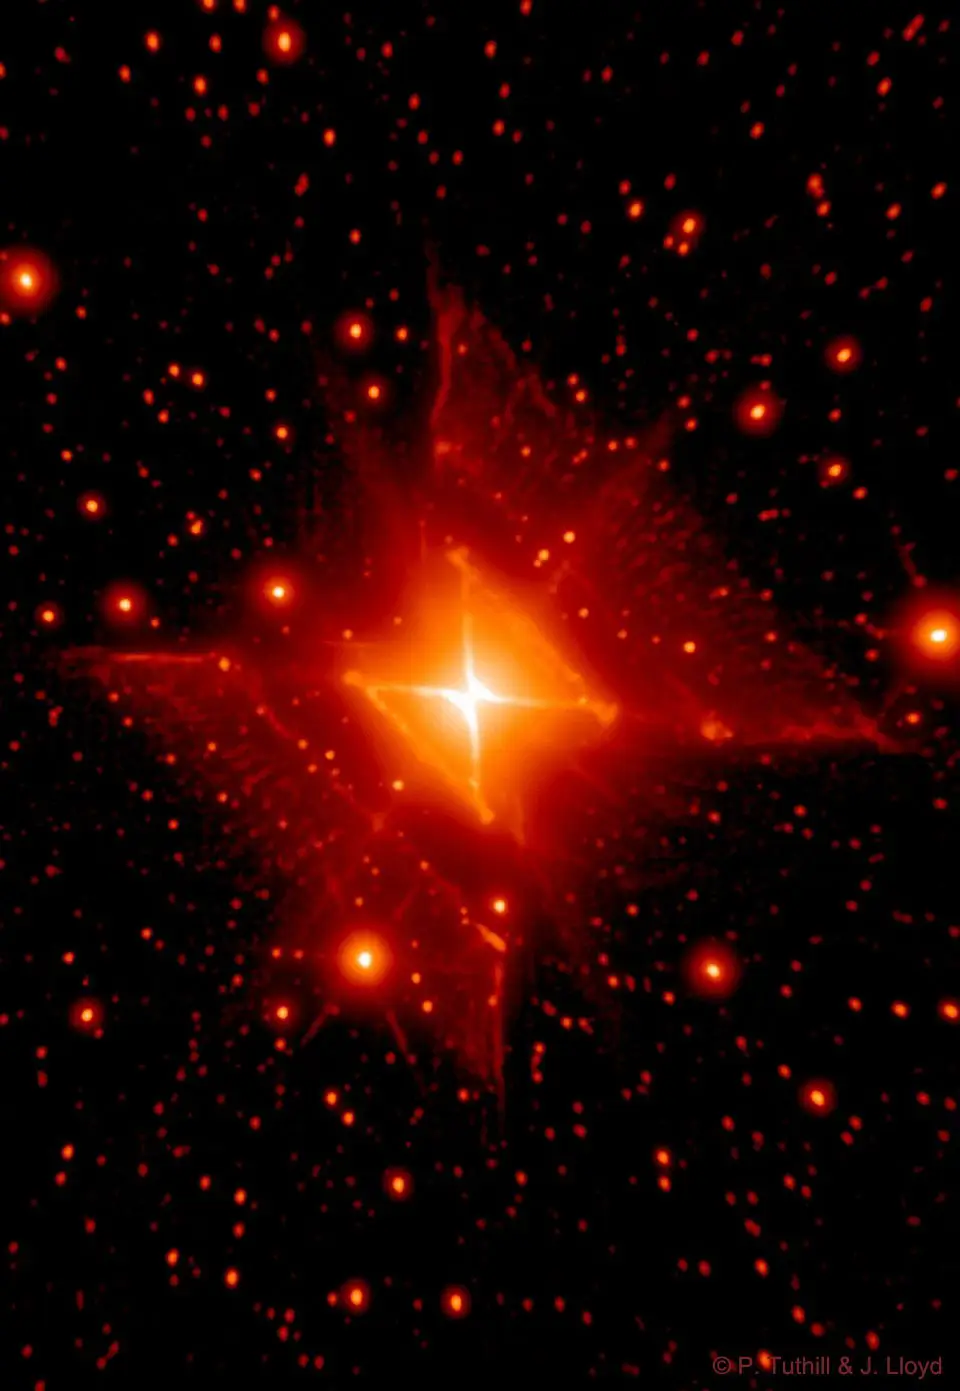 [The Red Square Nebula](https://apod.nasa.gov/image/2109/RedSquare_Tuthill_960.jpg)